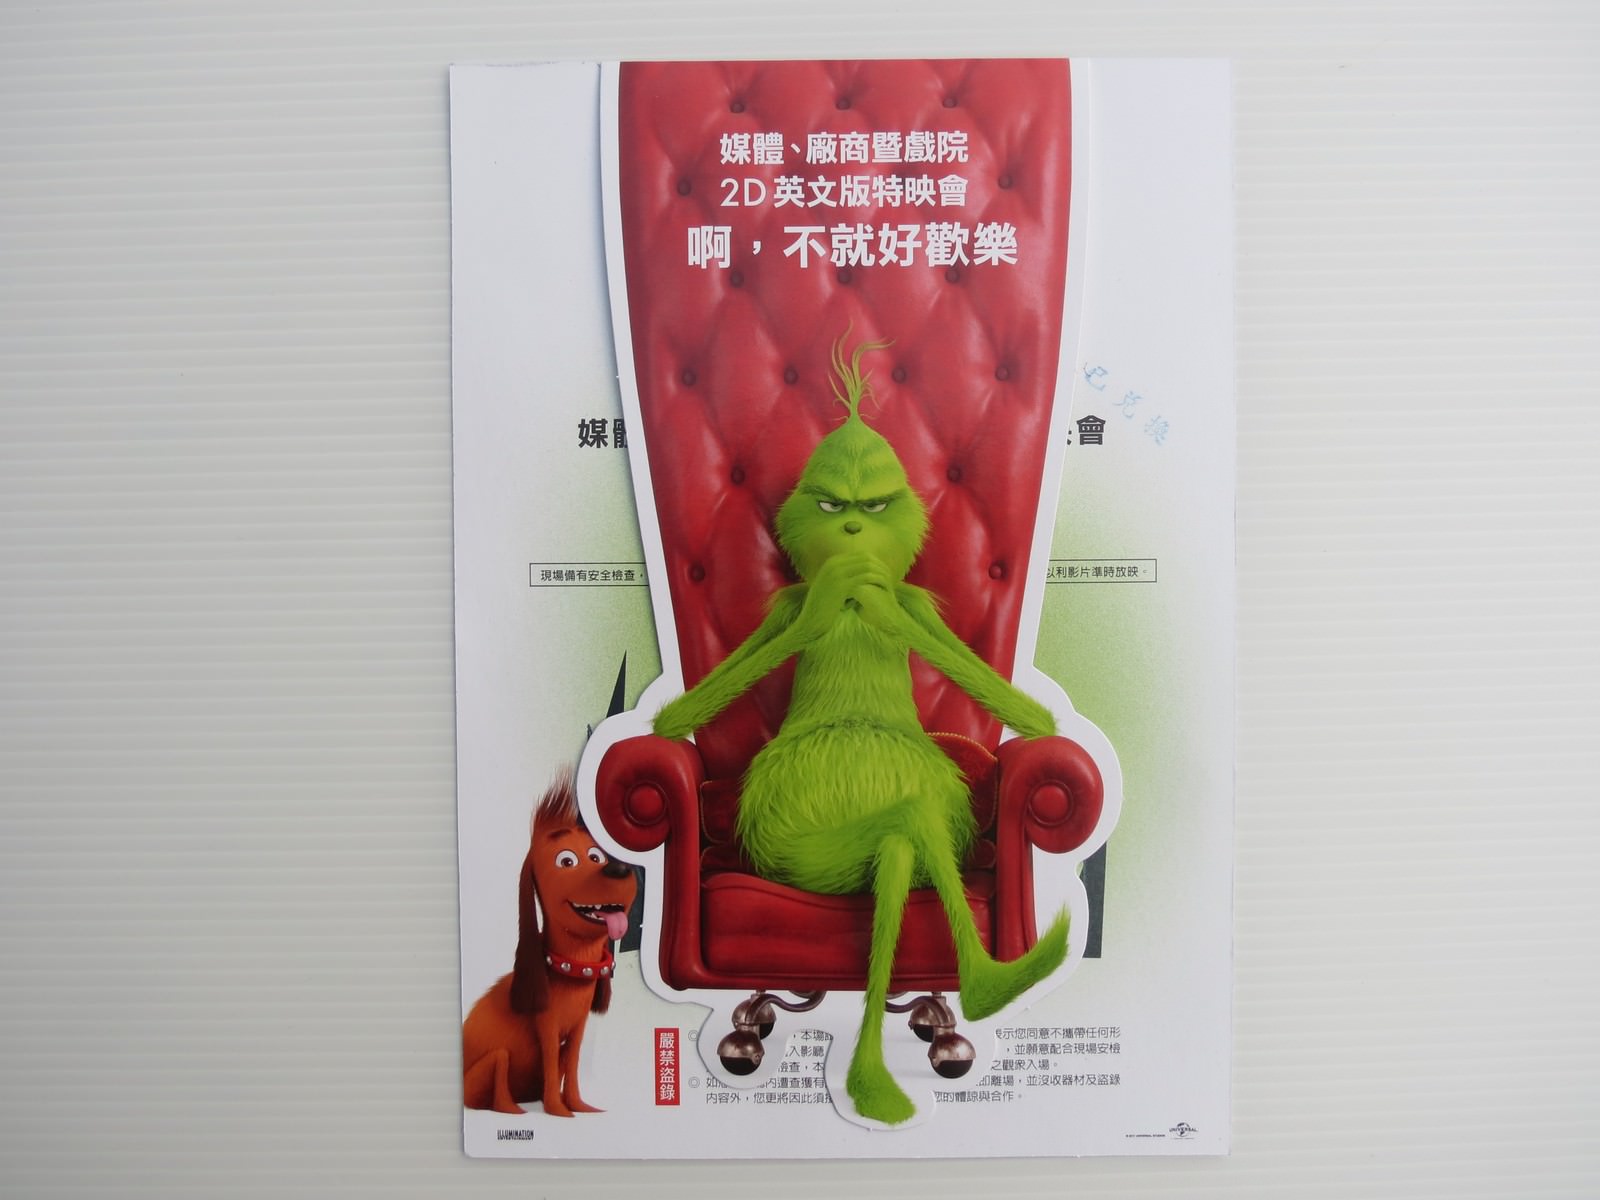 Movie, The Grinch(美國, 2018年) / 鬼靈精(台灣) / 绿毛怪格林奇(中國) / 聖誕怪怪傑(香港), 特映會邀請卡